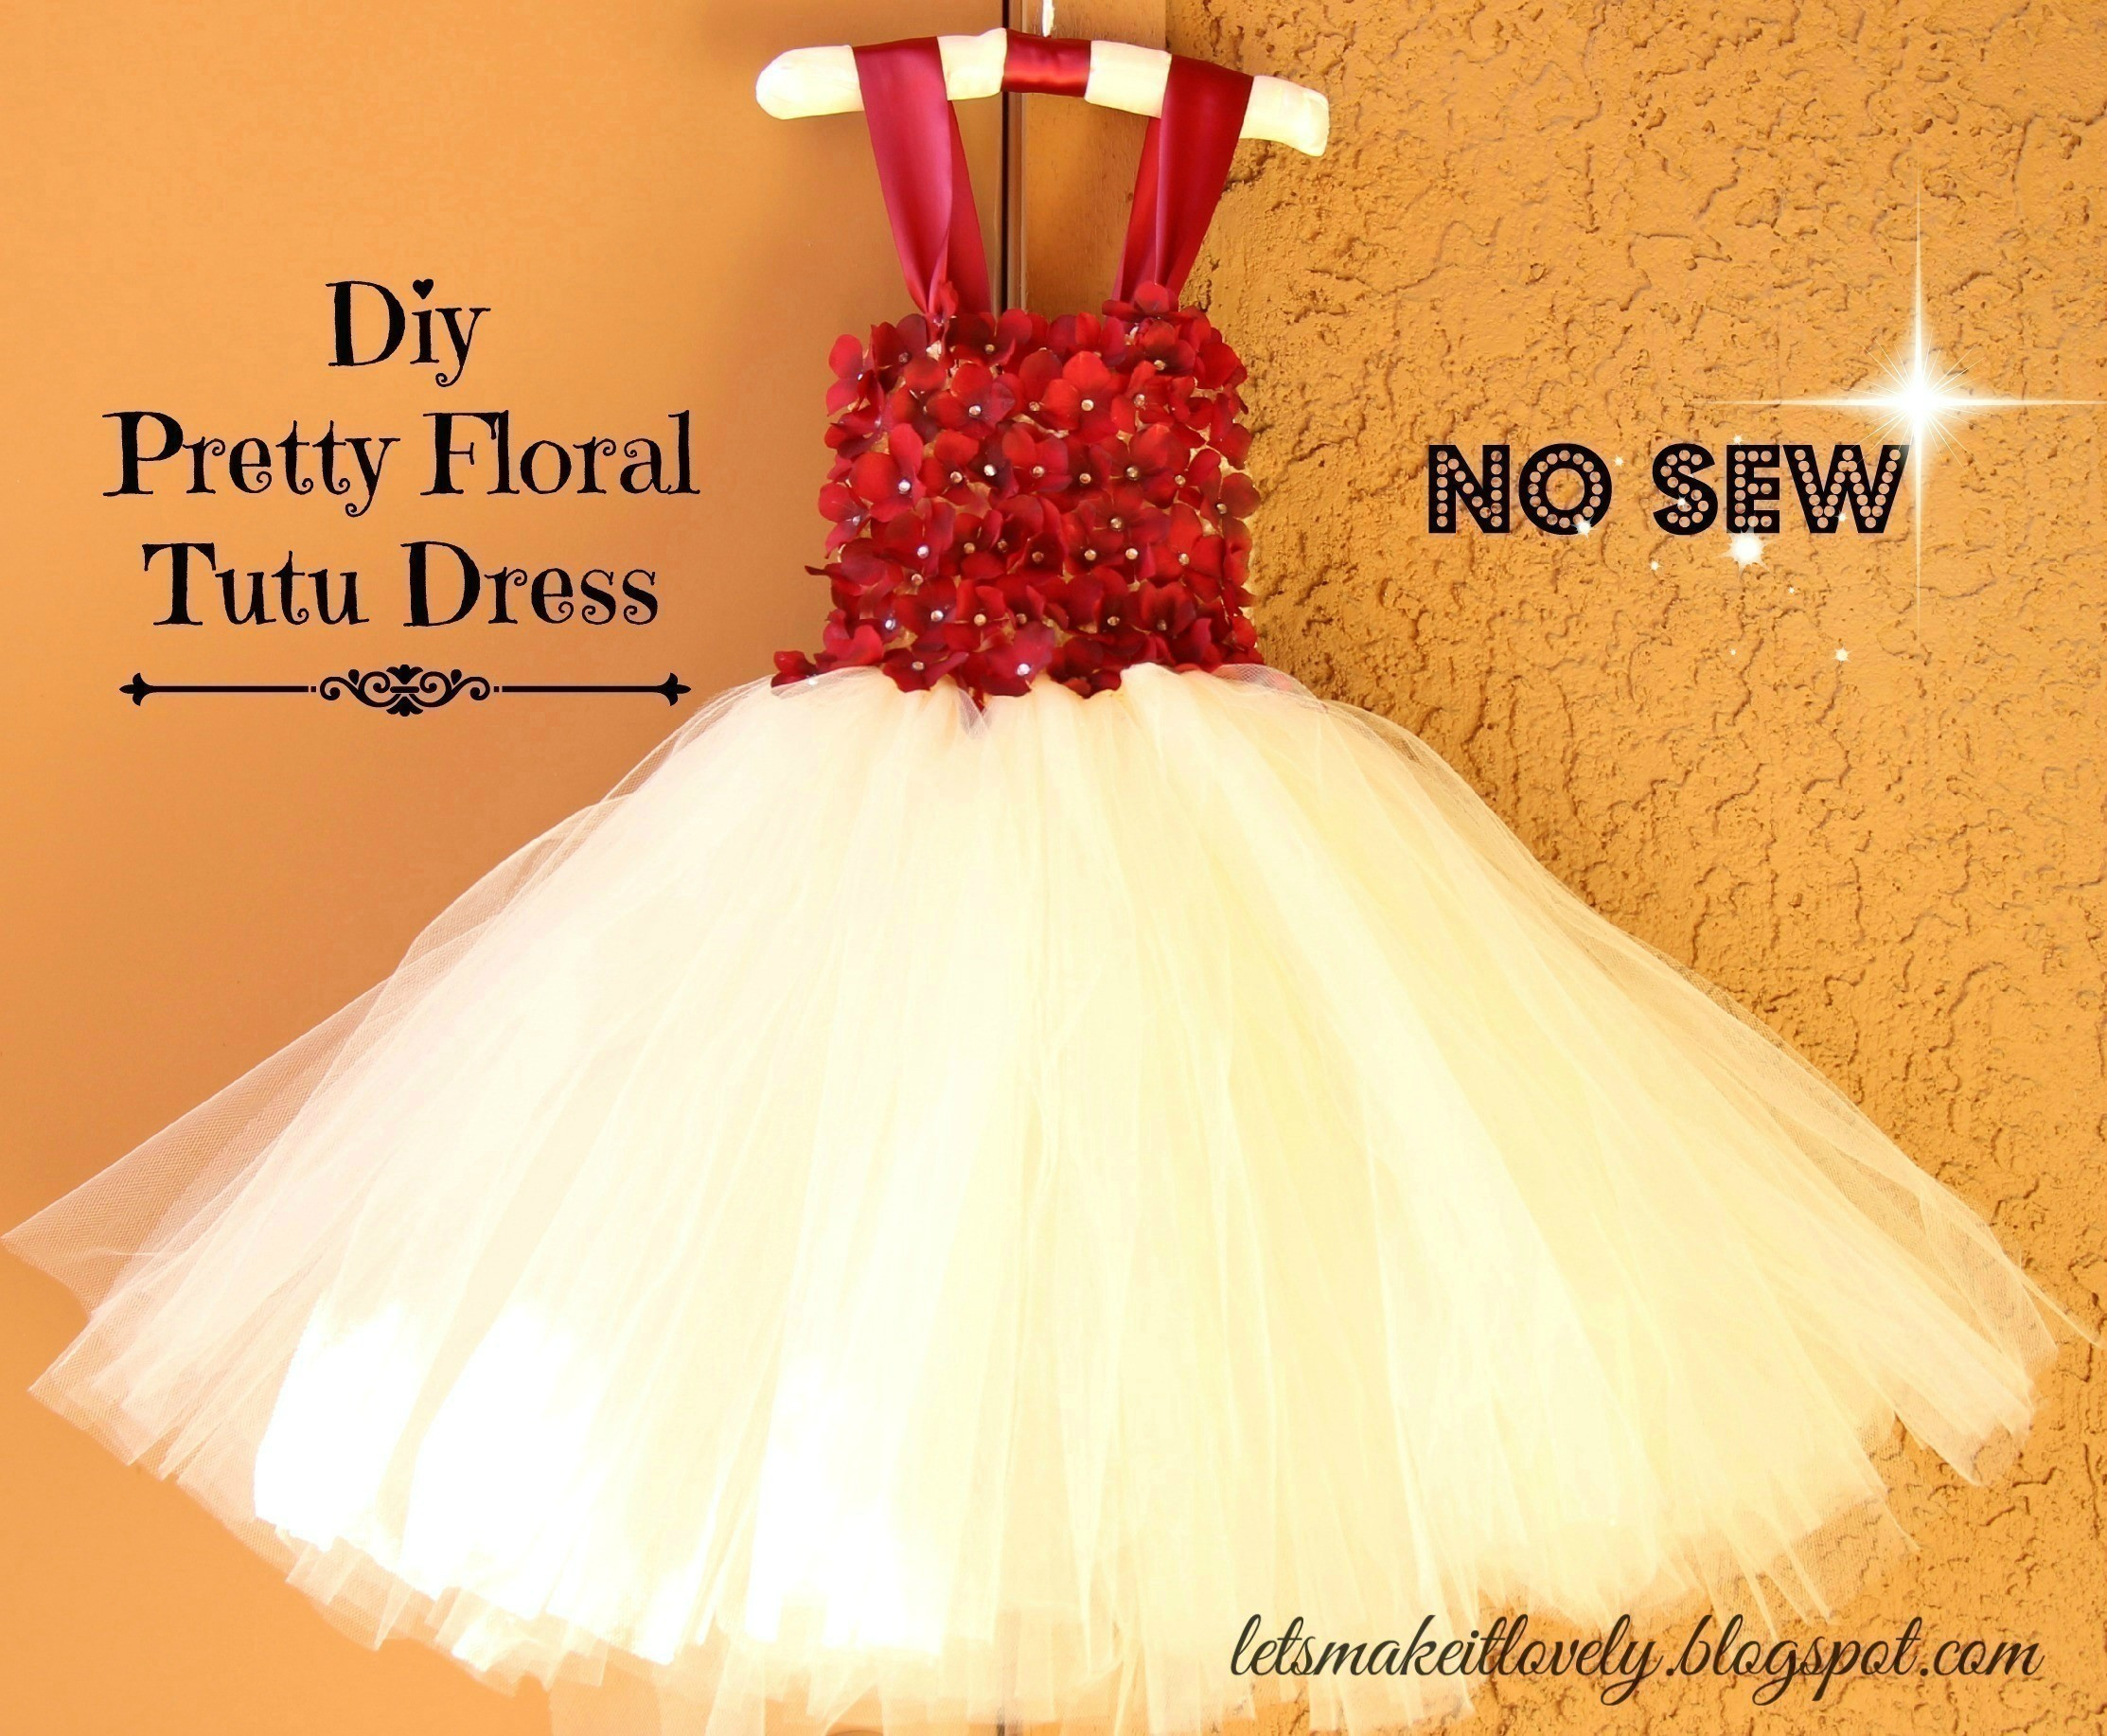 DIY Tutu Dress For Toddler
 Diy Flower Girl Dress Tutu Dress · How To Sew A Baby